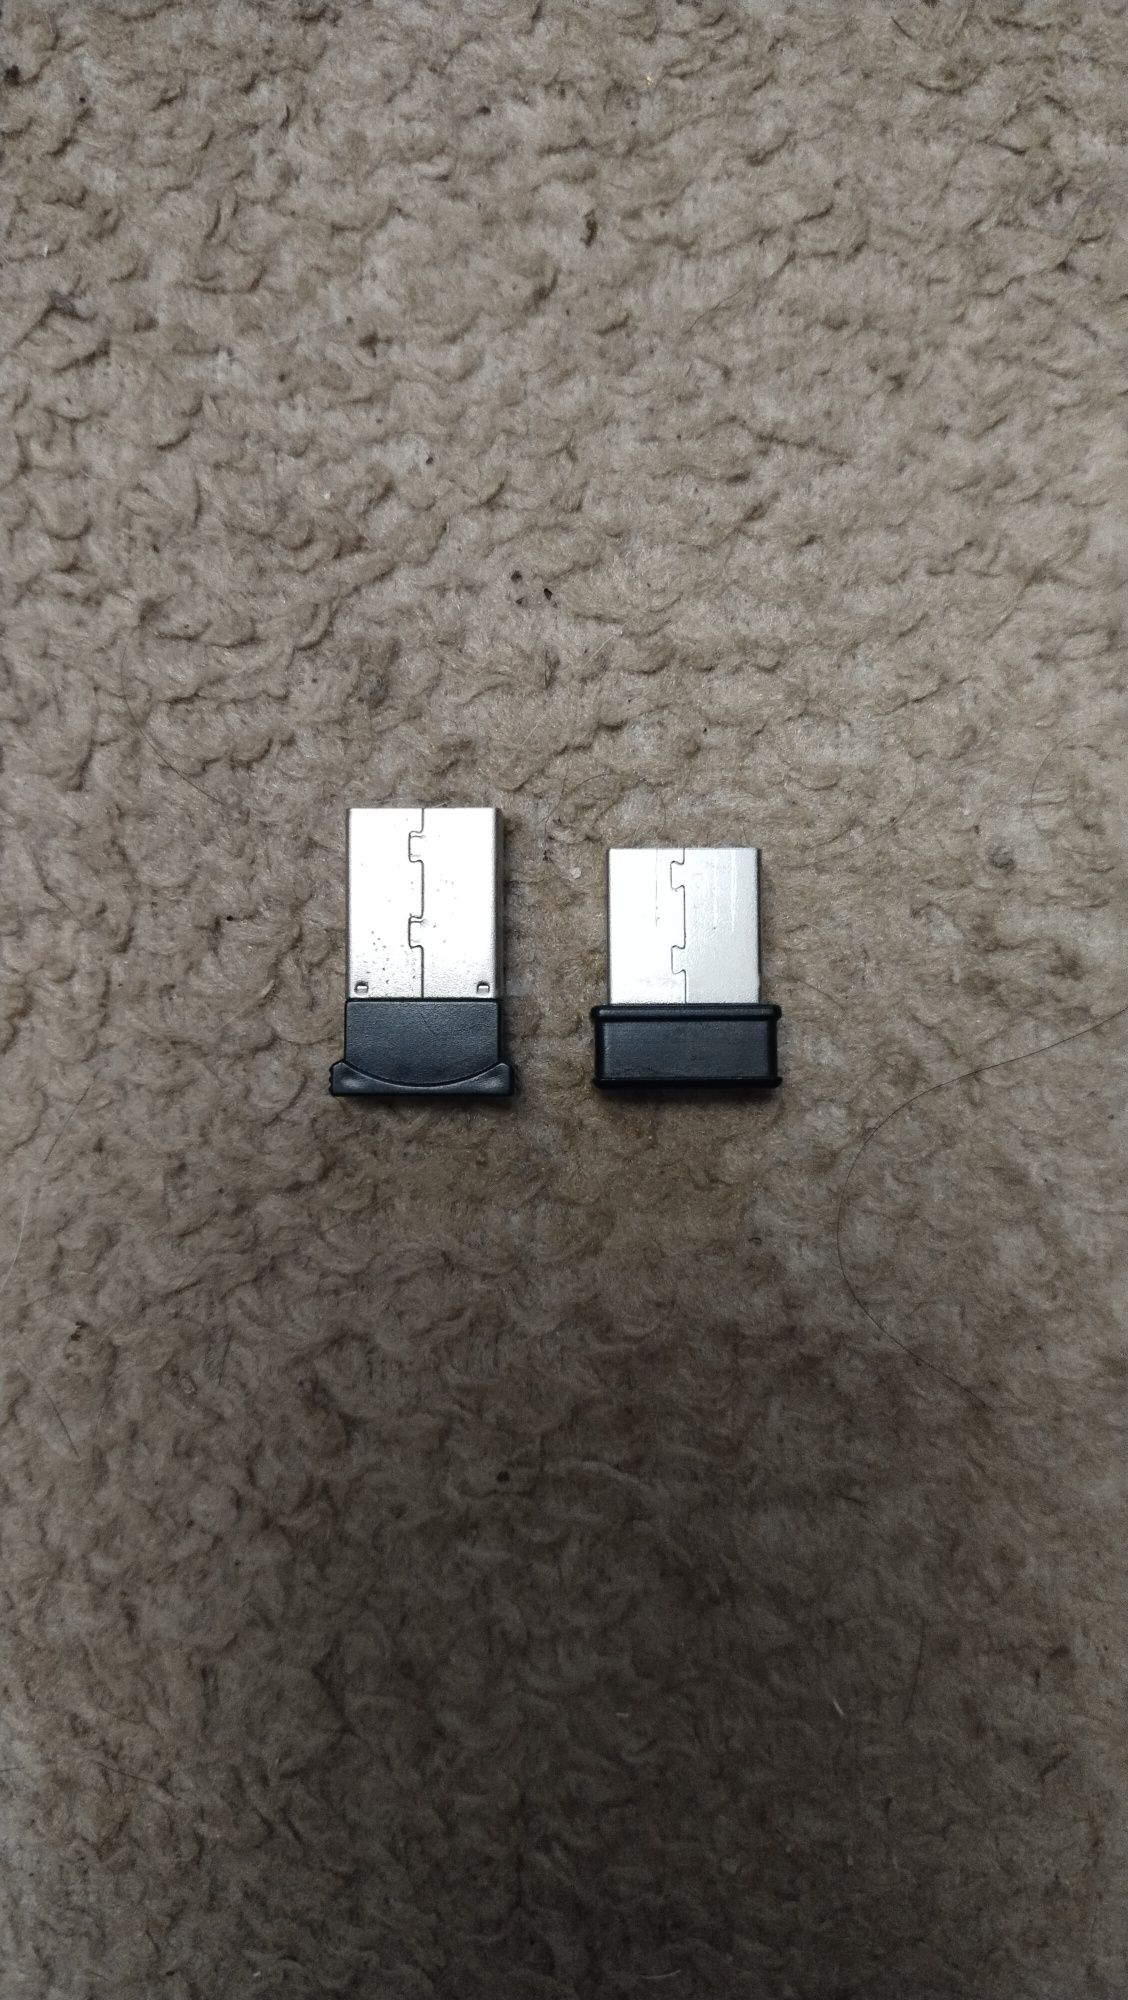 USB Bluetooth адаптеры новые.